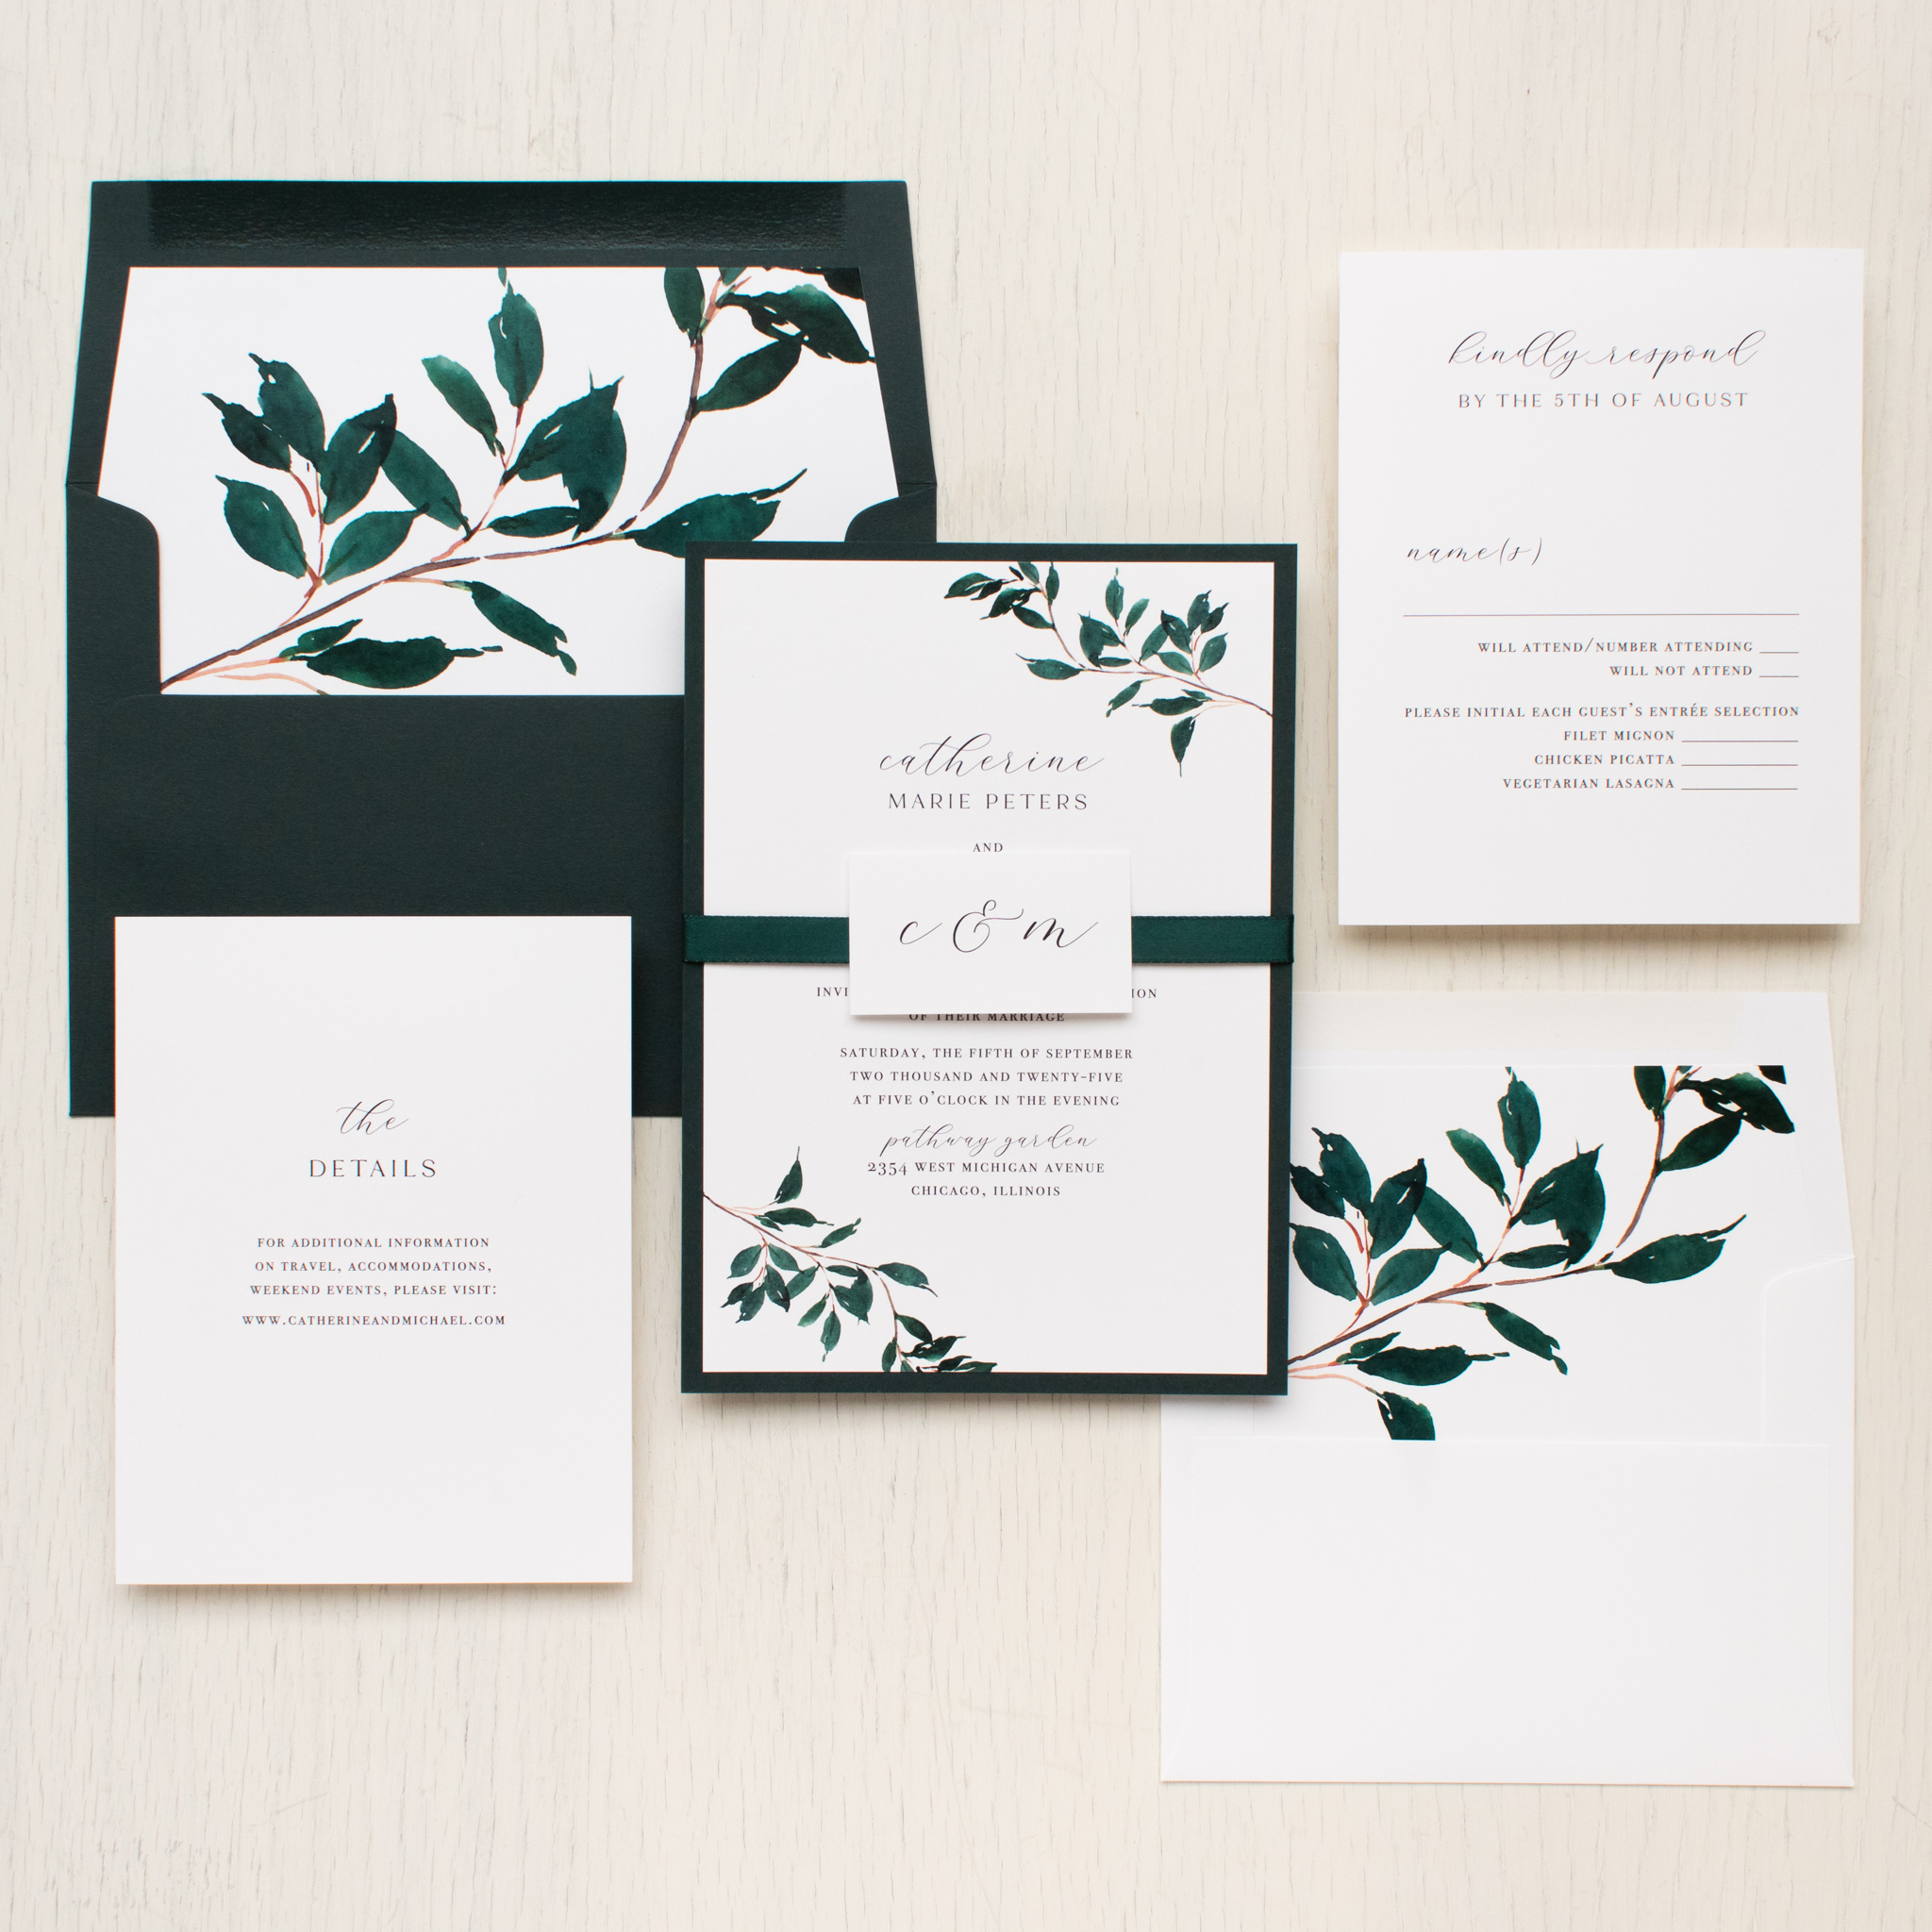 Green wedding invitations, green wedding, green wedding cards